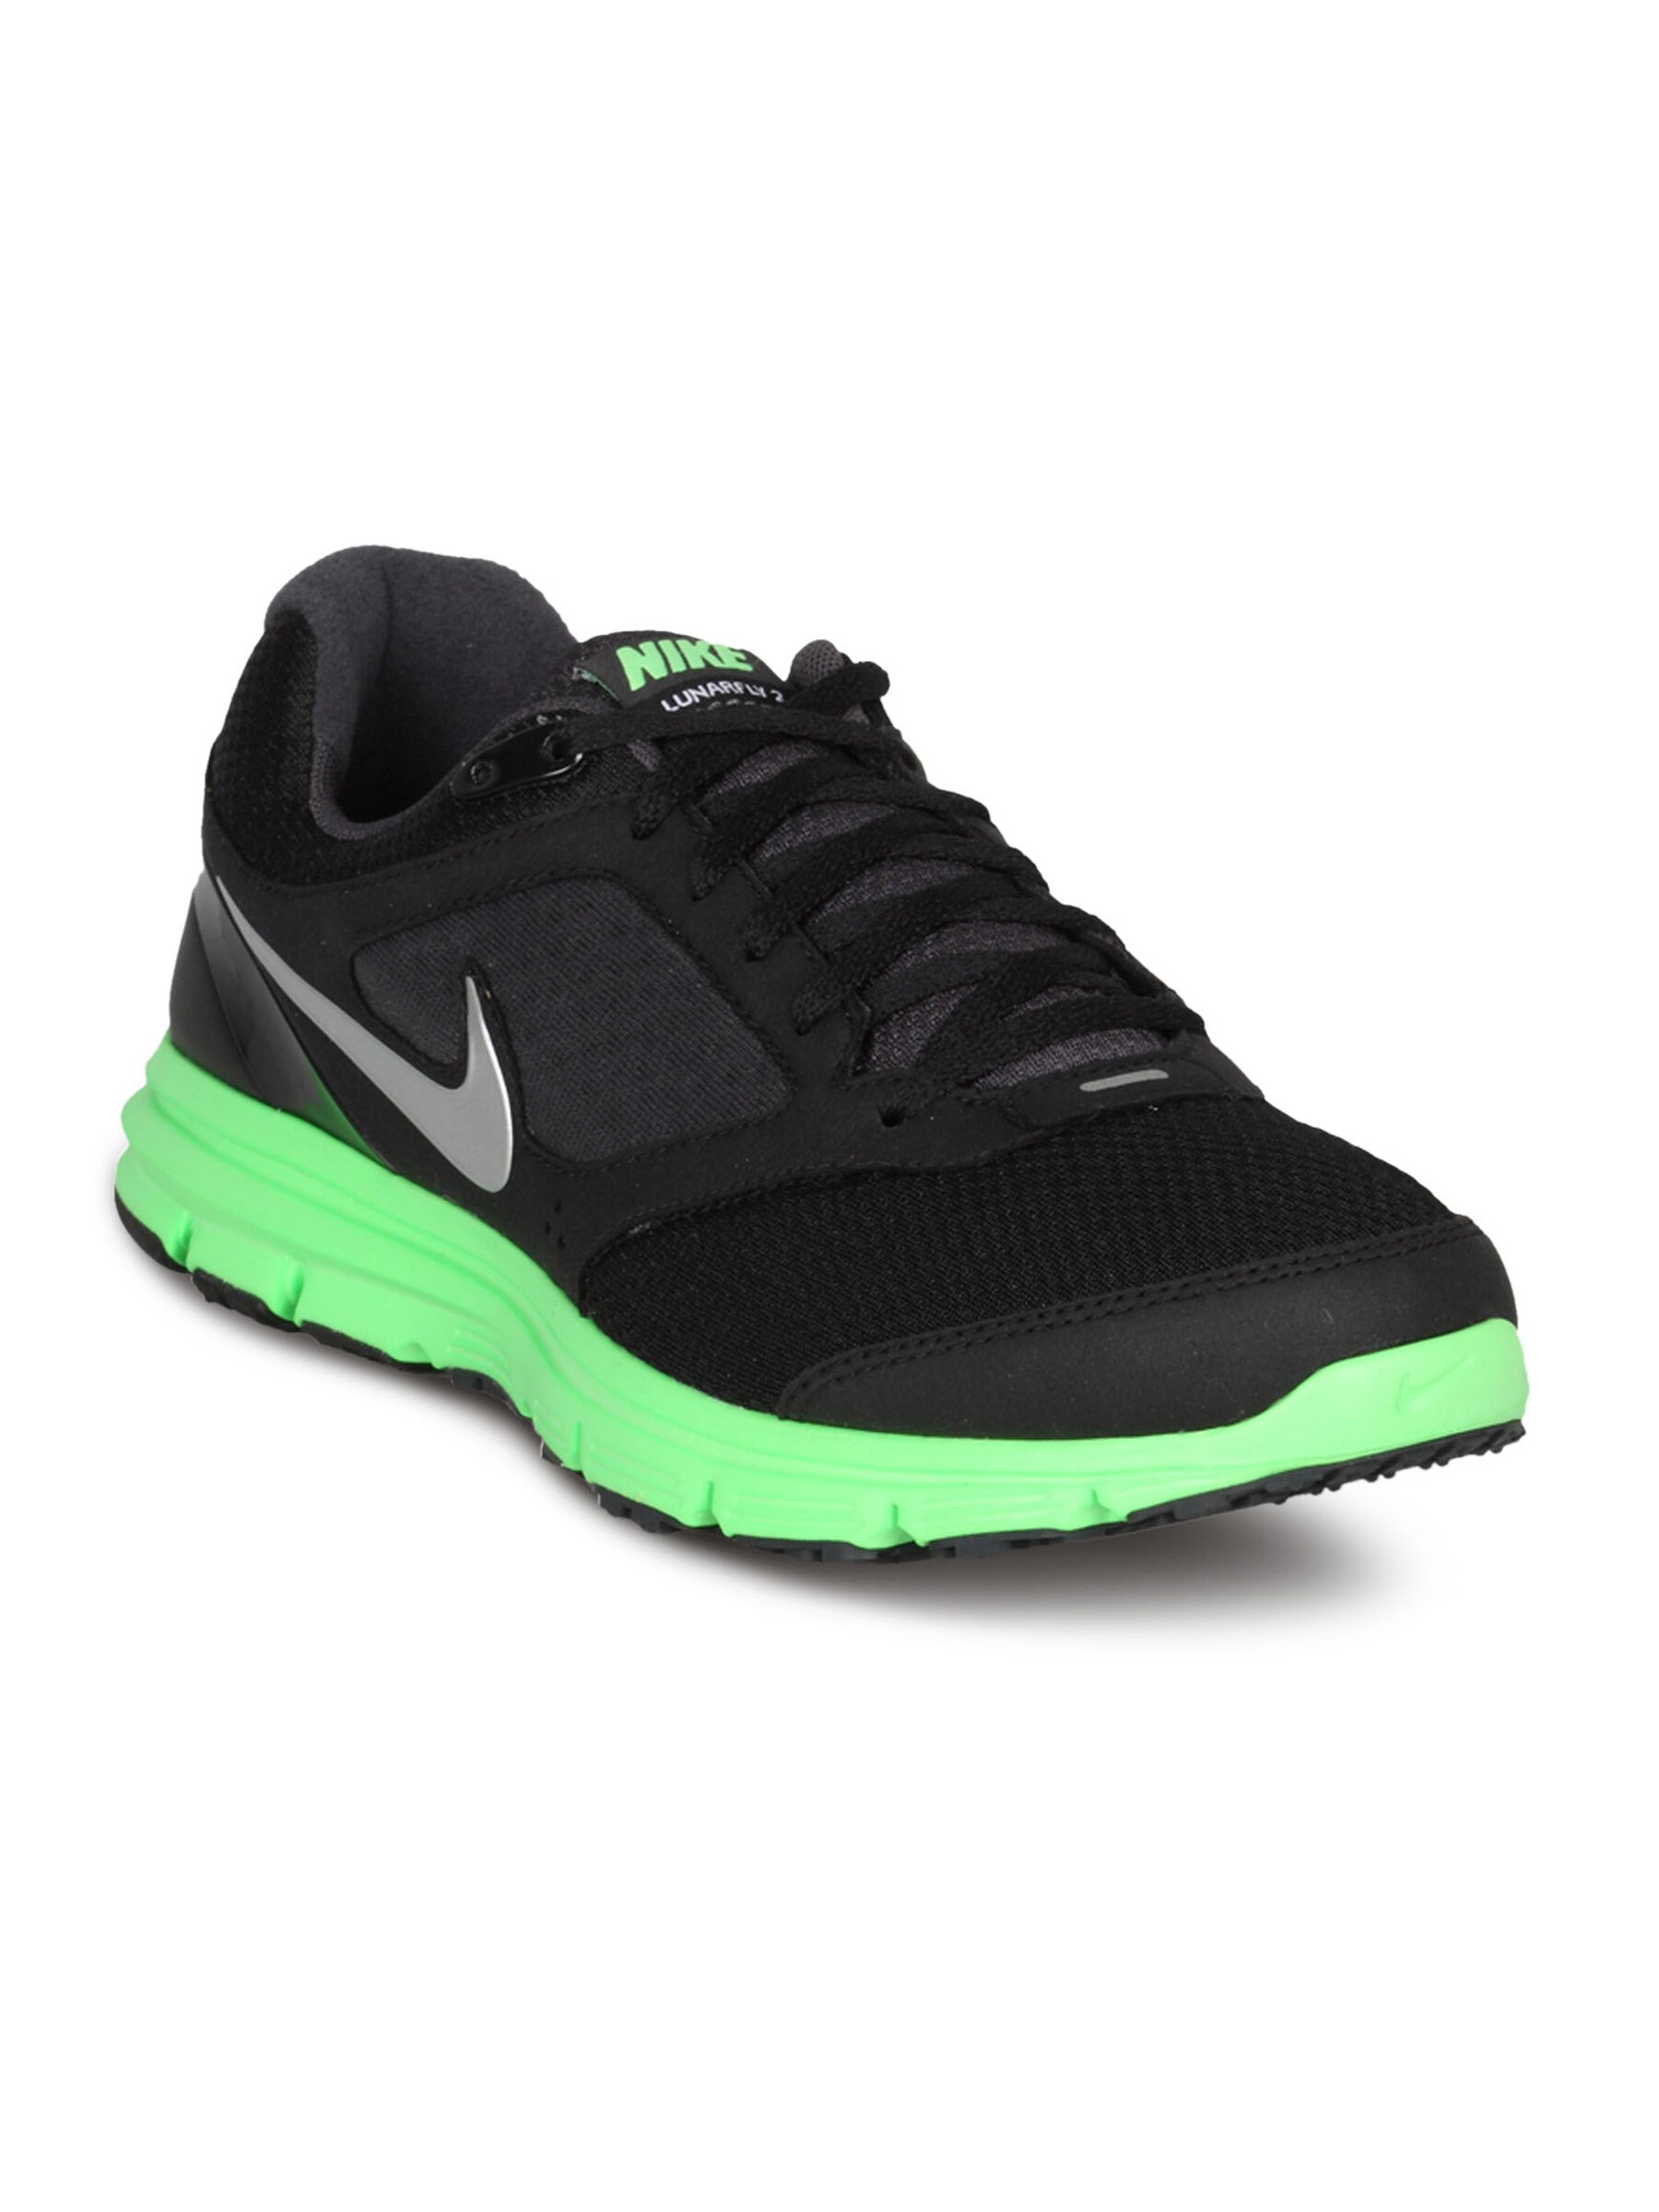 Nike Men's Lunar Fly Black Shoe